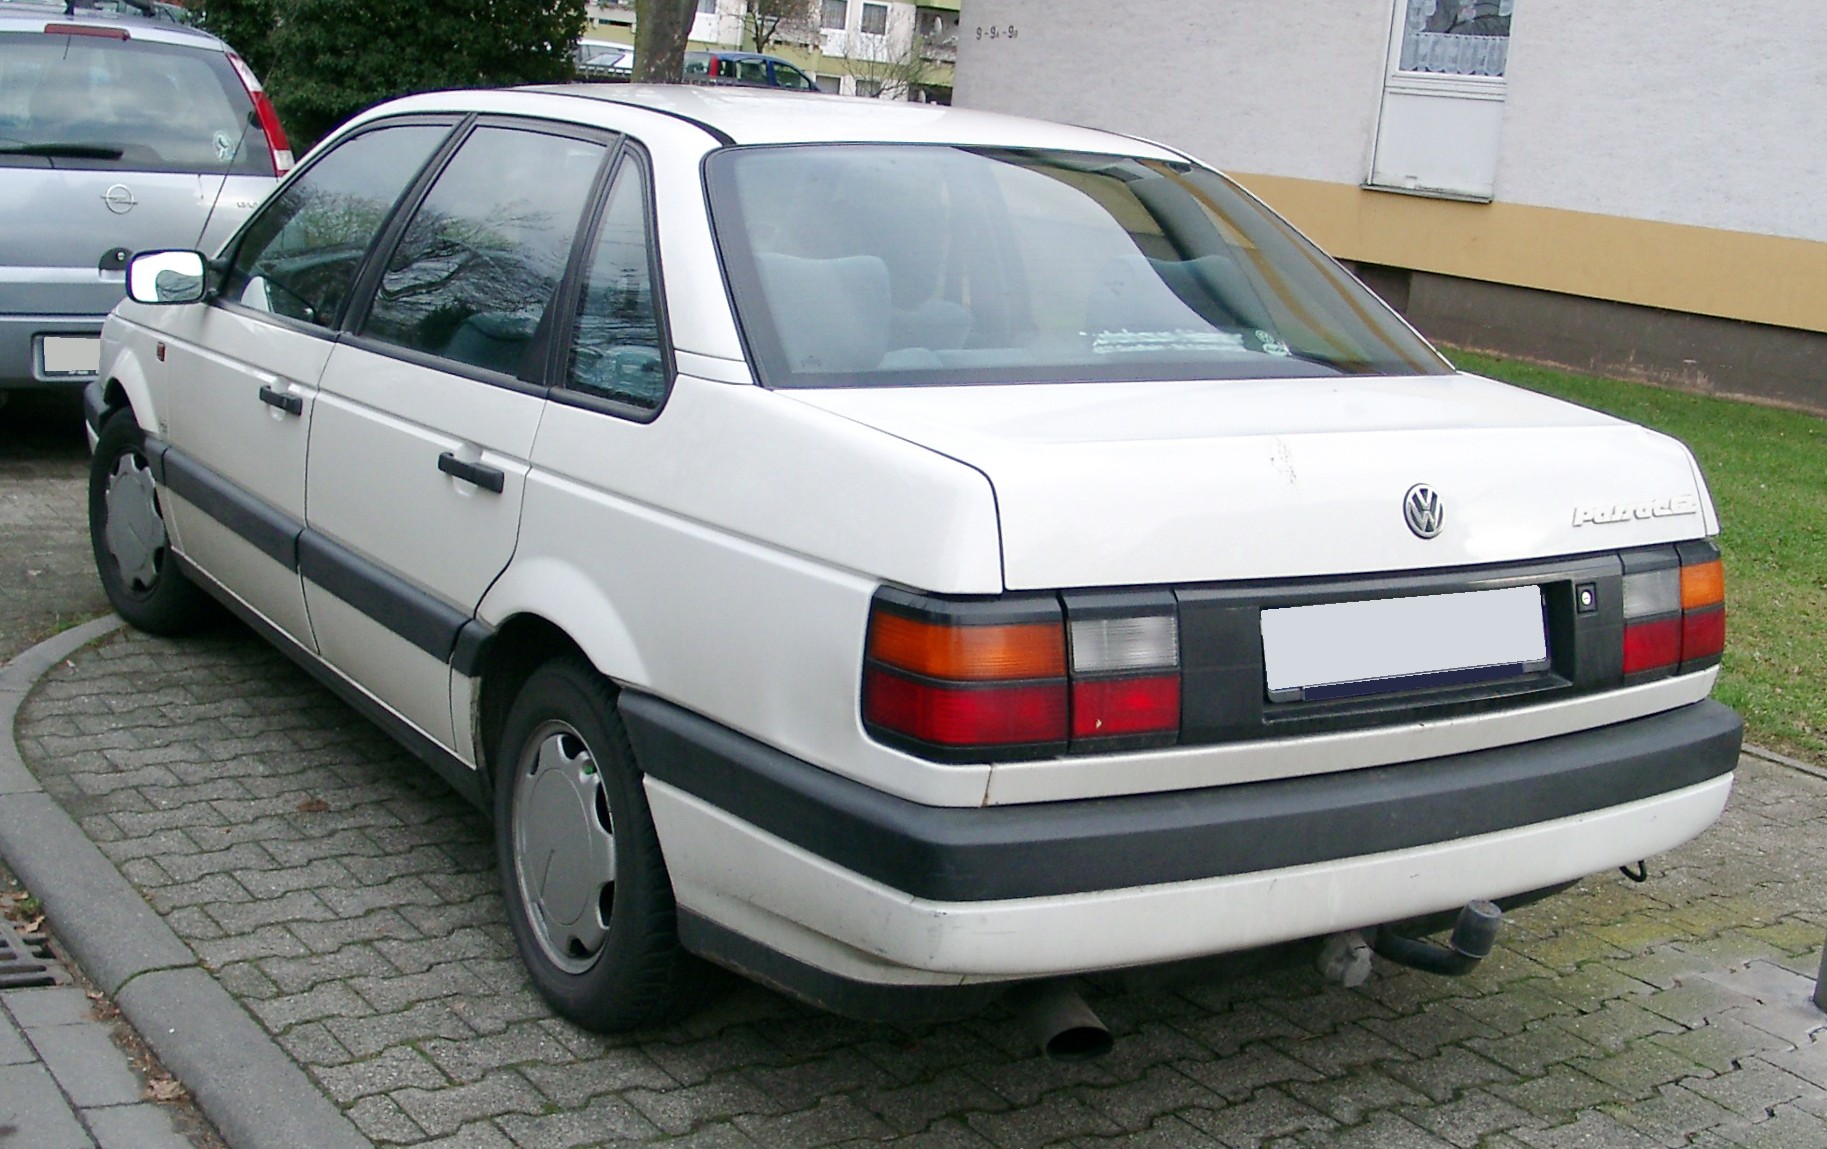 VW_Passat_B3_rear_20071205.jpg